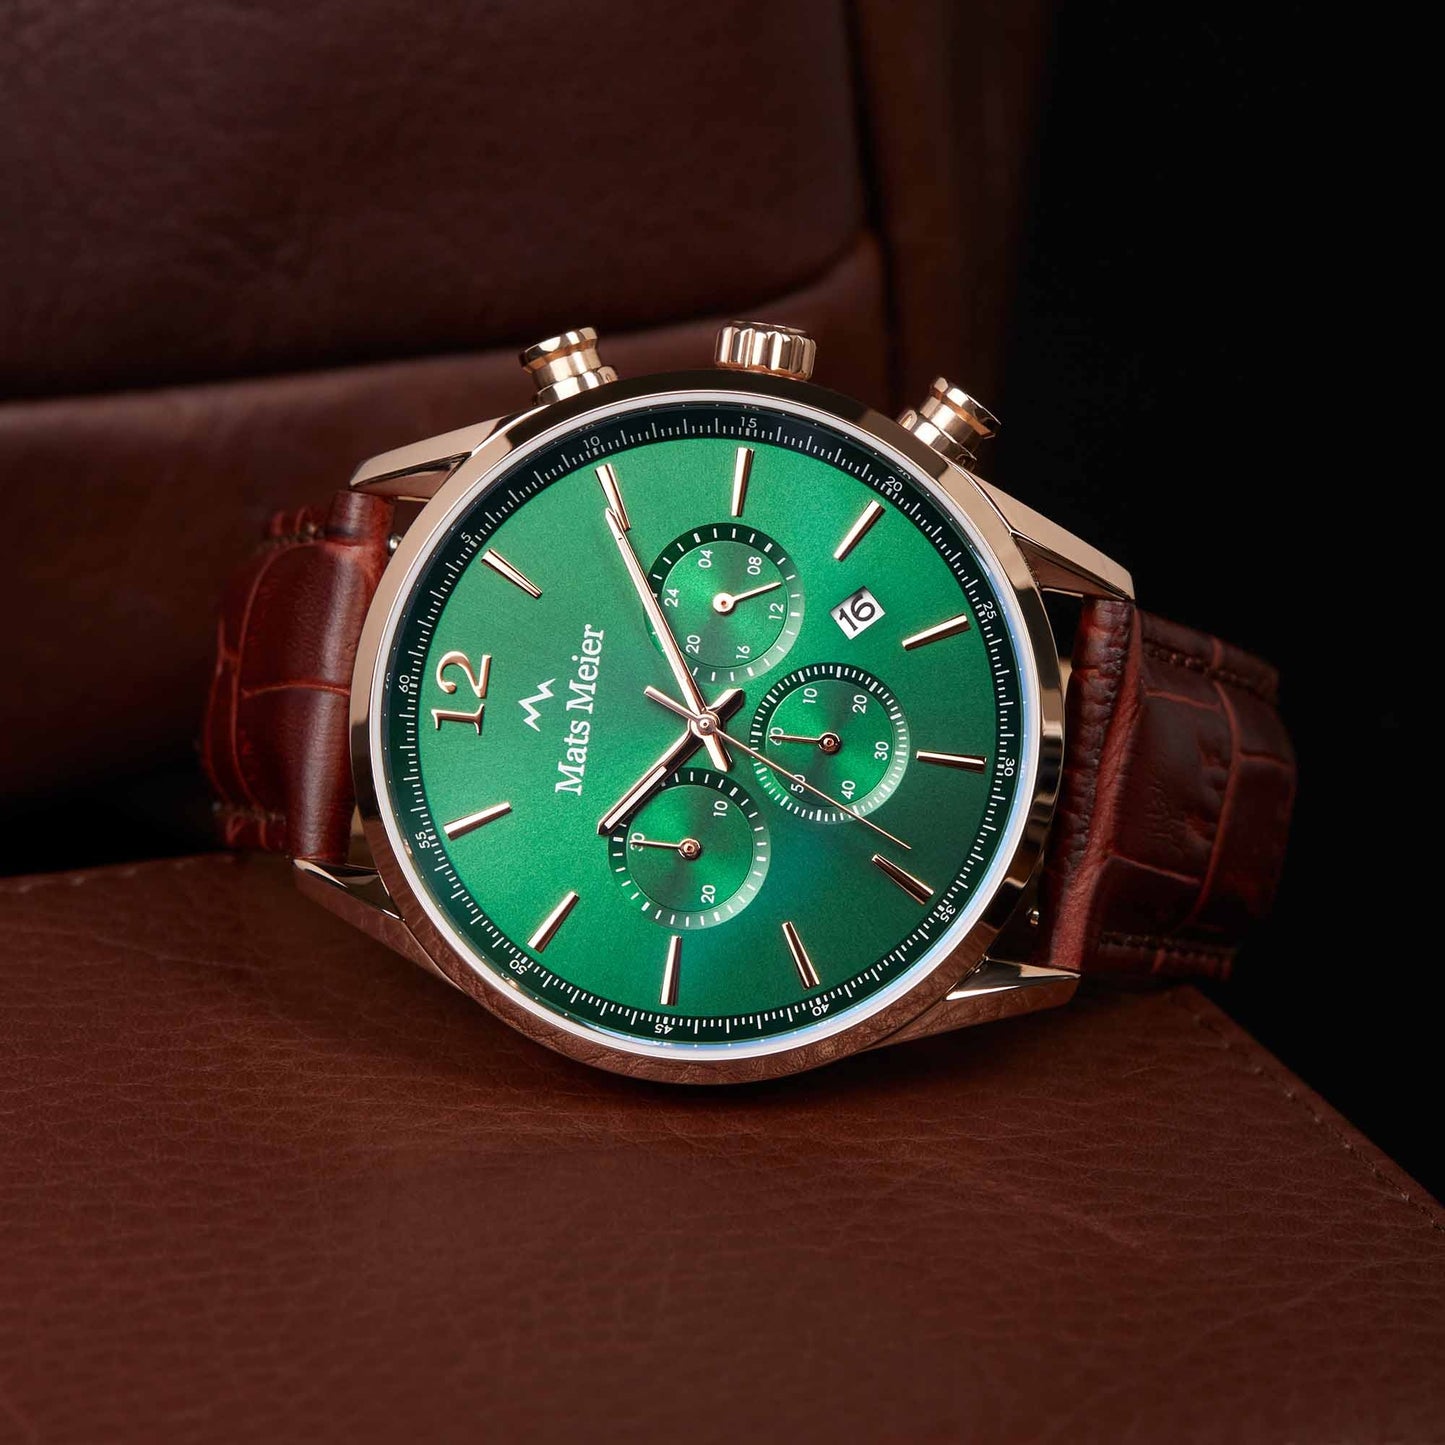 Grand Cornier chronograaf herenhorloge bruin en groen